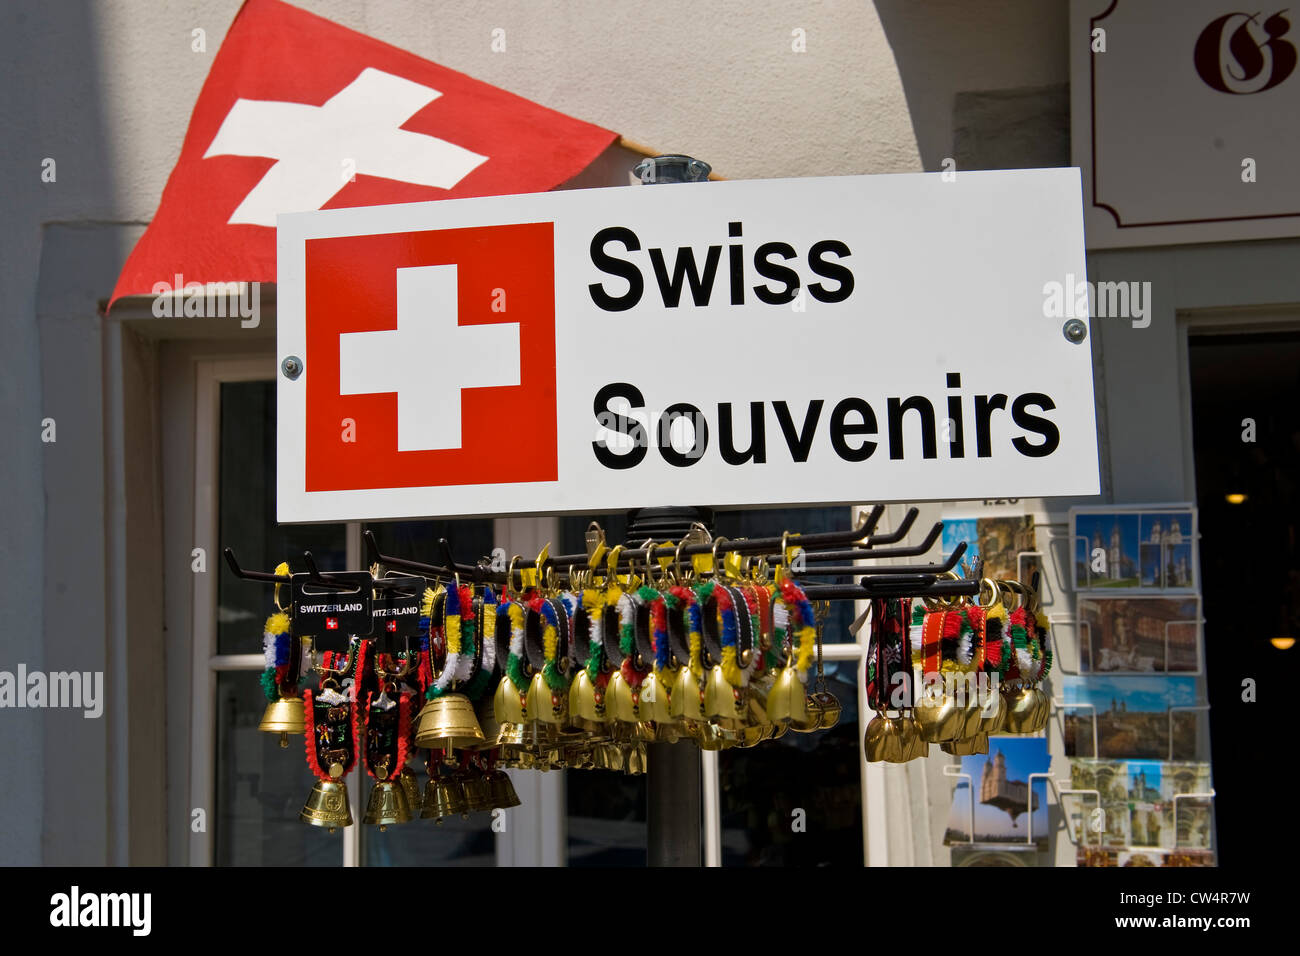 Switzerland, St. Gallen, Swiss souvenirs Stock Photo - Alamy